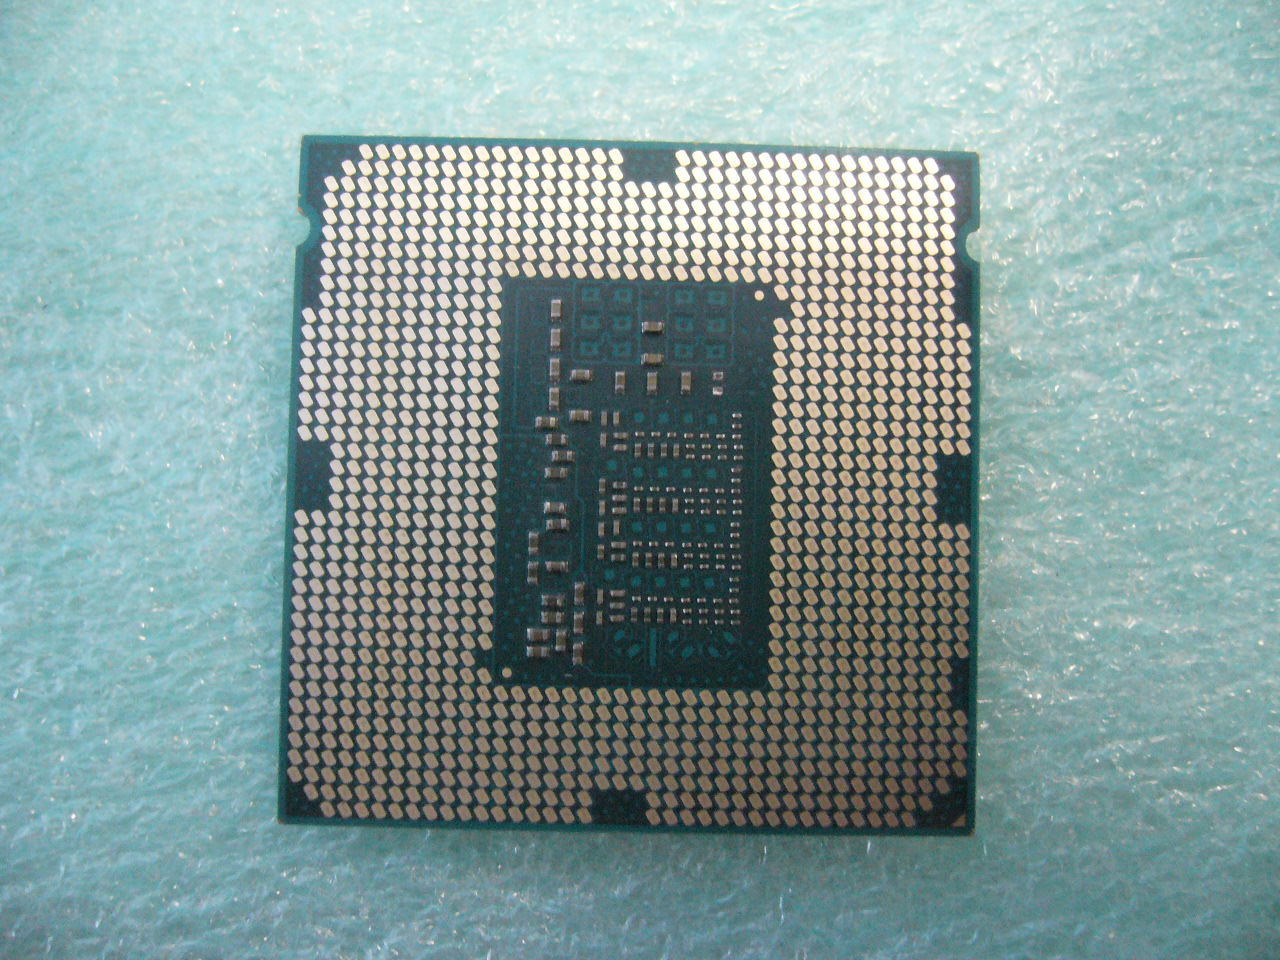 QTY 1x Intel CPU i5-4590T Quad-Cores 2.0Ghz LGA1150 SR1S6 NOT WORKING - Click Image to Close